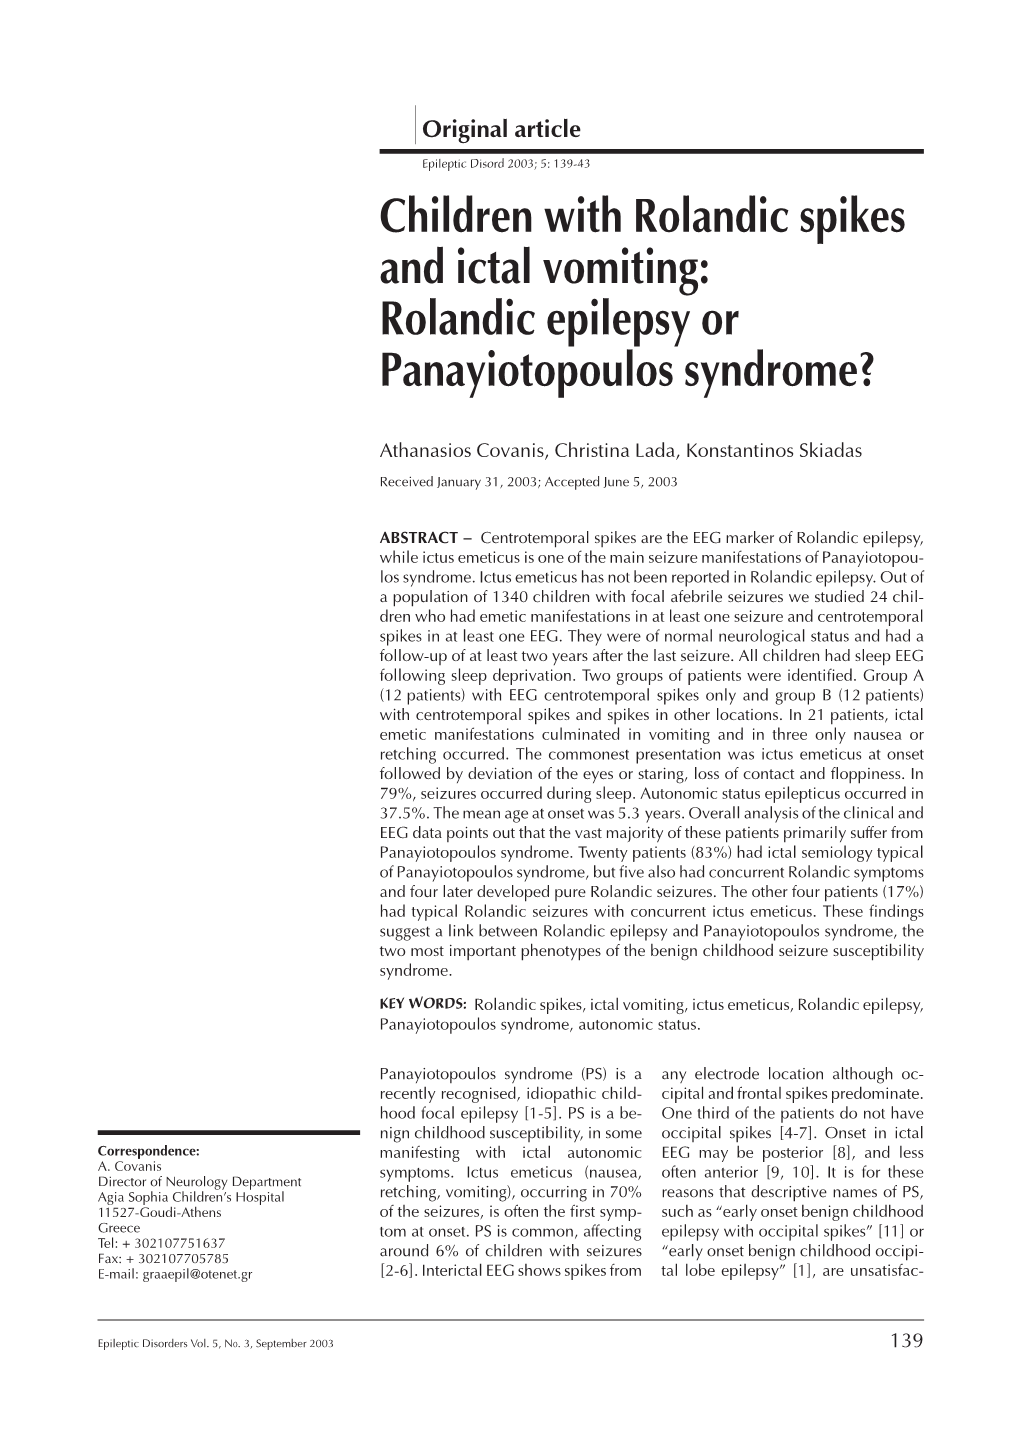 Rolandic Epilepsy Or Panayiotopoulos Syndrome?